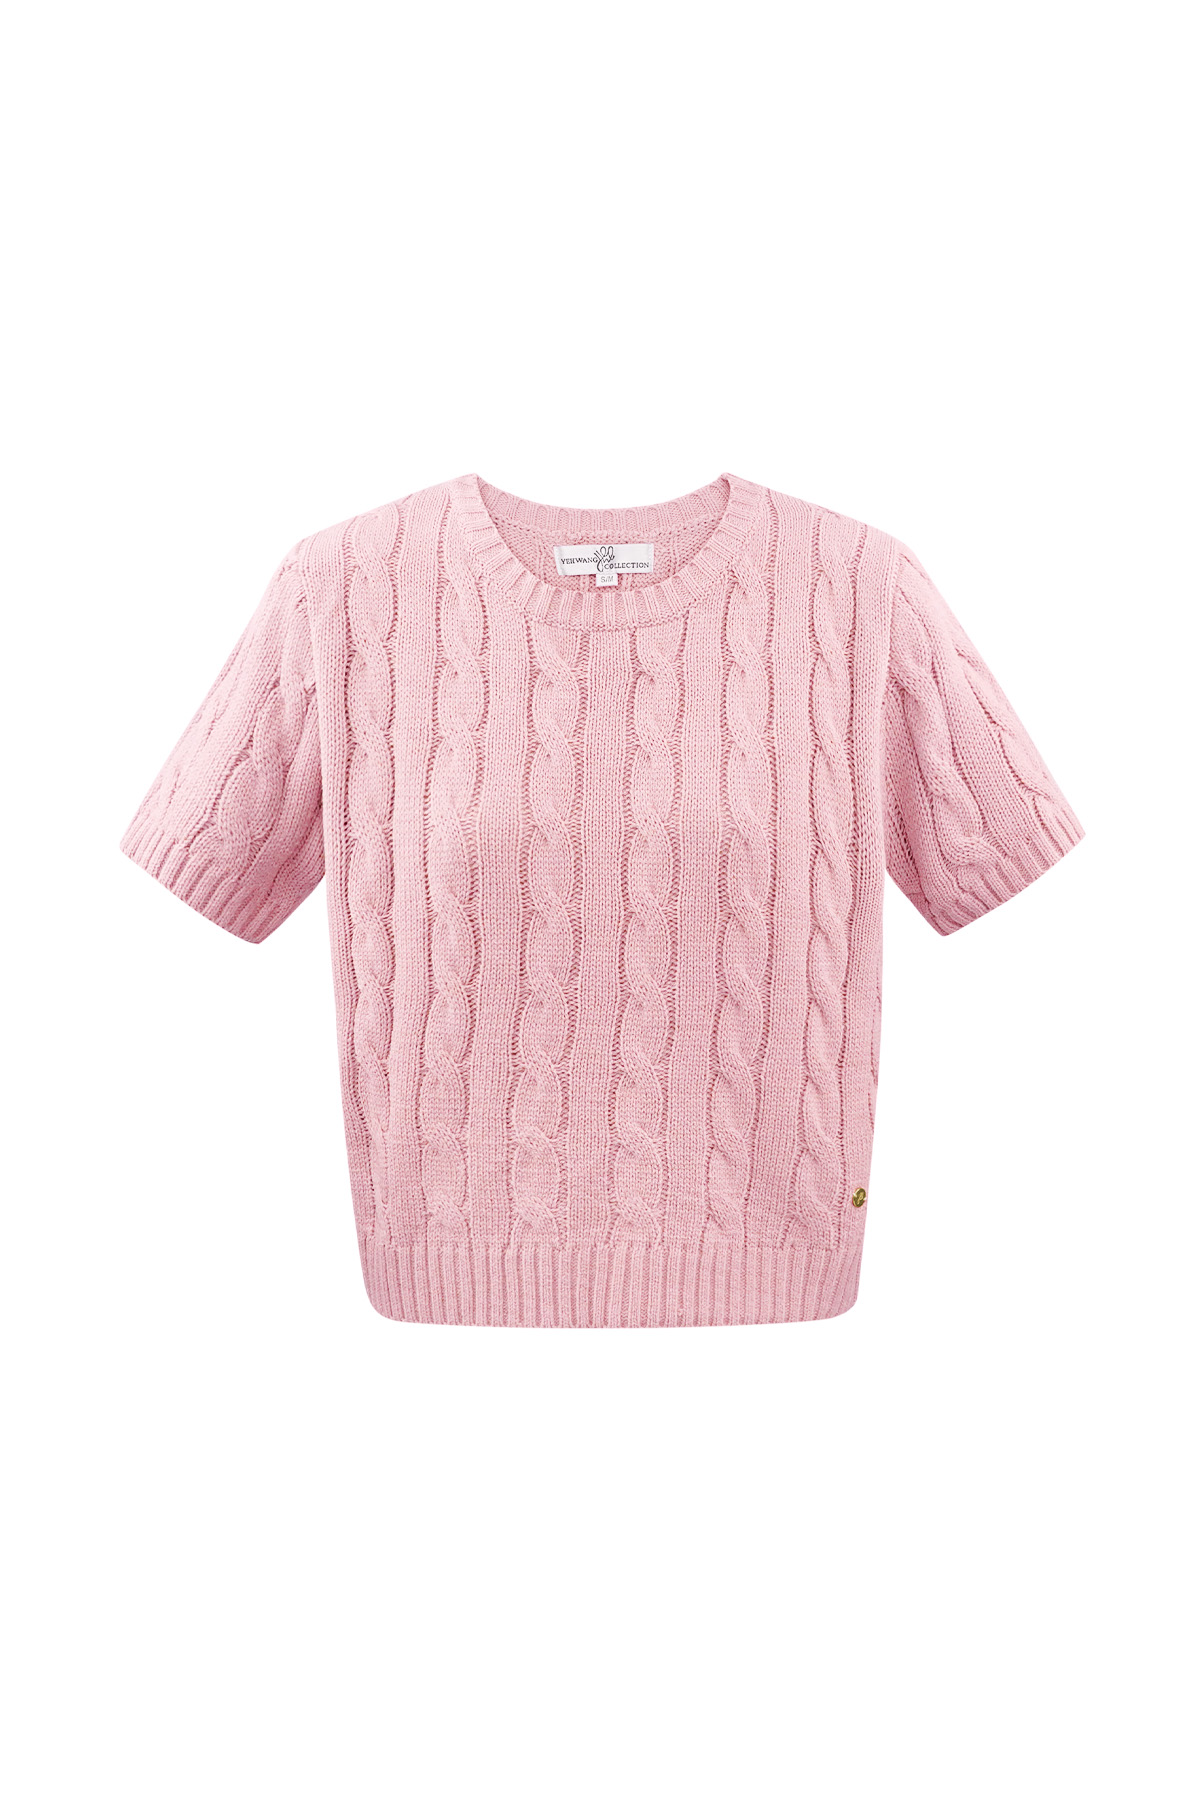 Klassieke gebreide trui met kabels en korte mouwen small/medium – roze